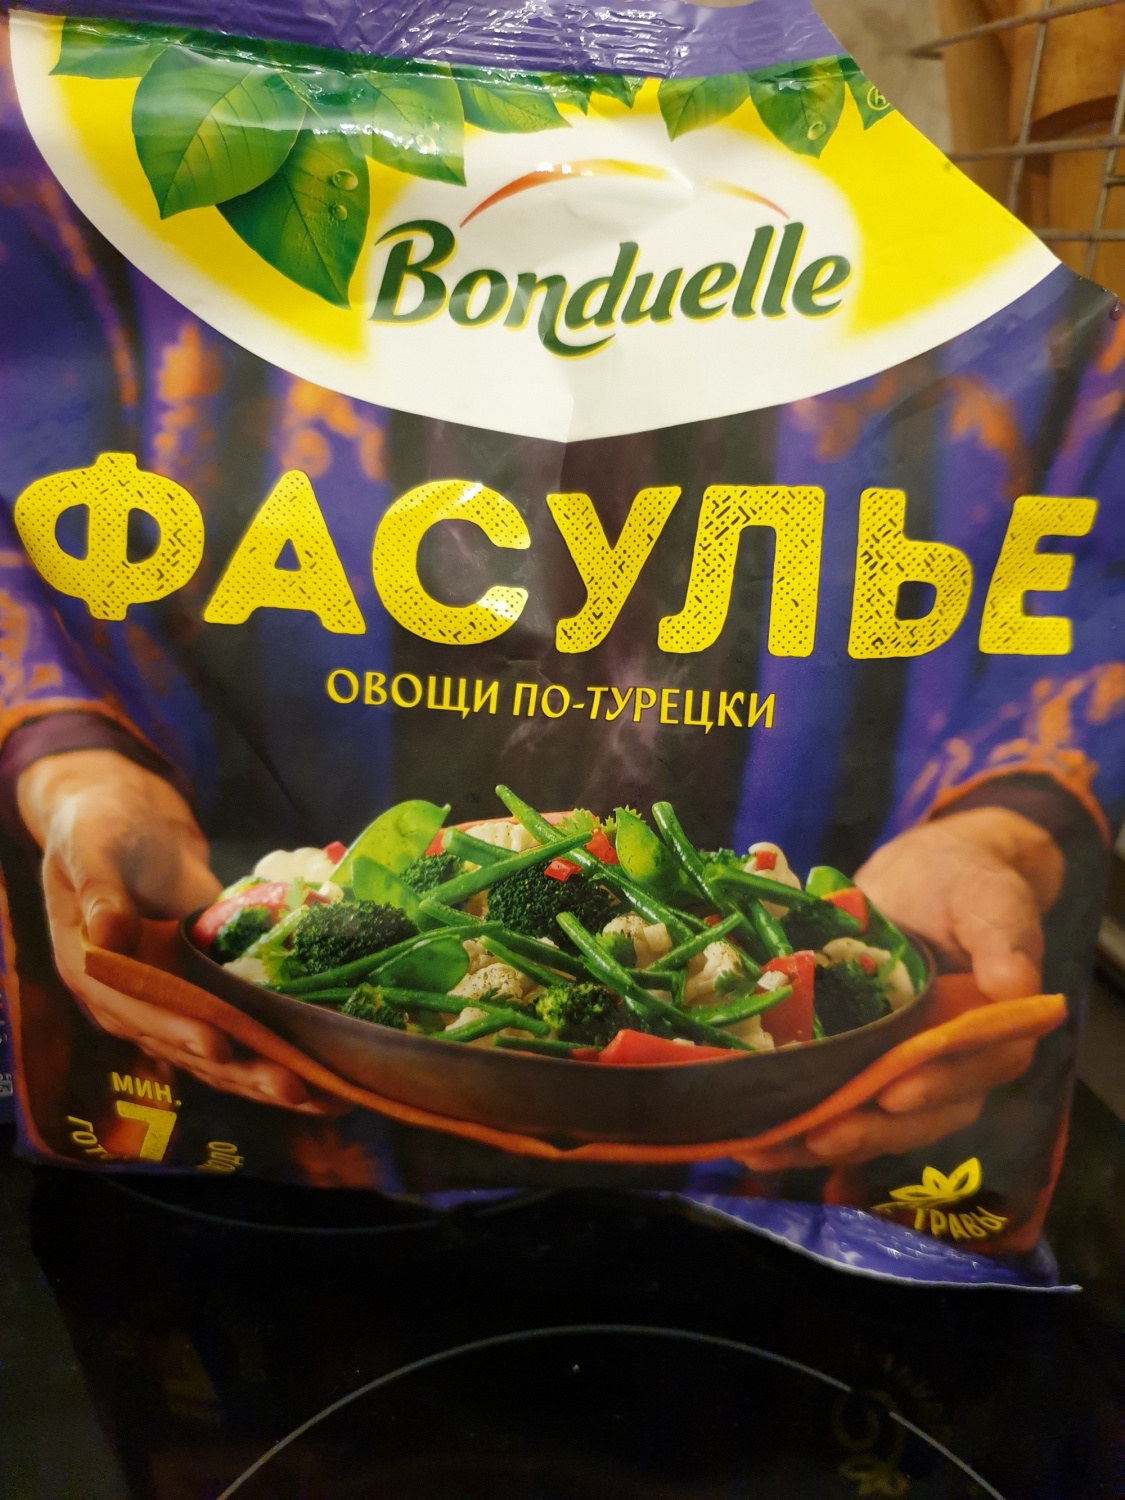 Замороженные овощи Bonduelle Фасулье фото